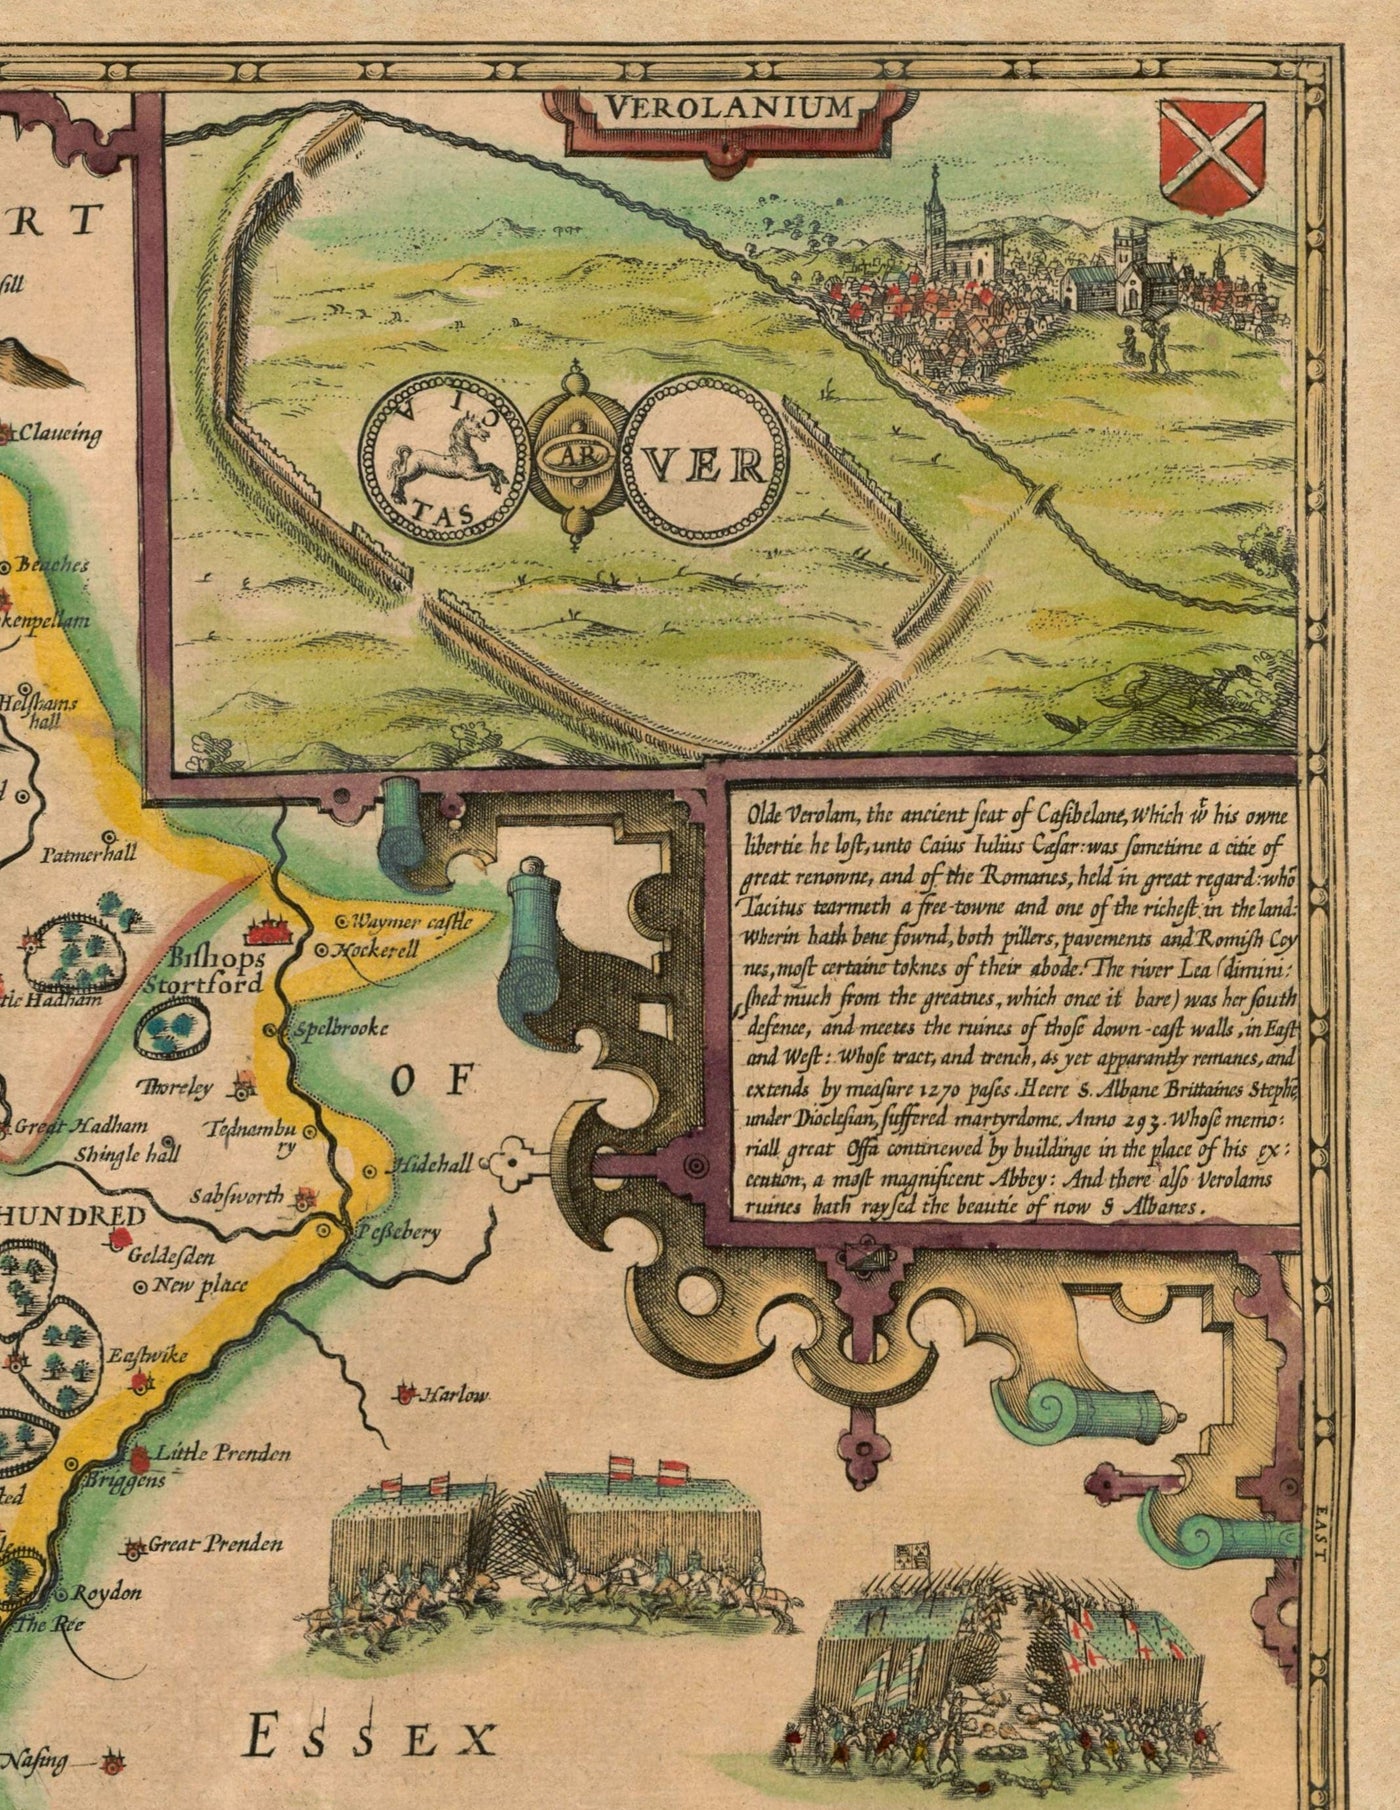 Old Map of Hertfordshire in 1611 by John Speed - Stevenage, St Albans, Watford, Hemel Hempstead